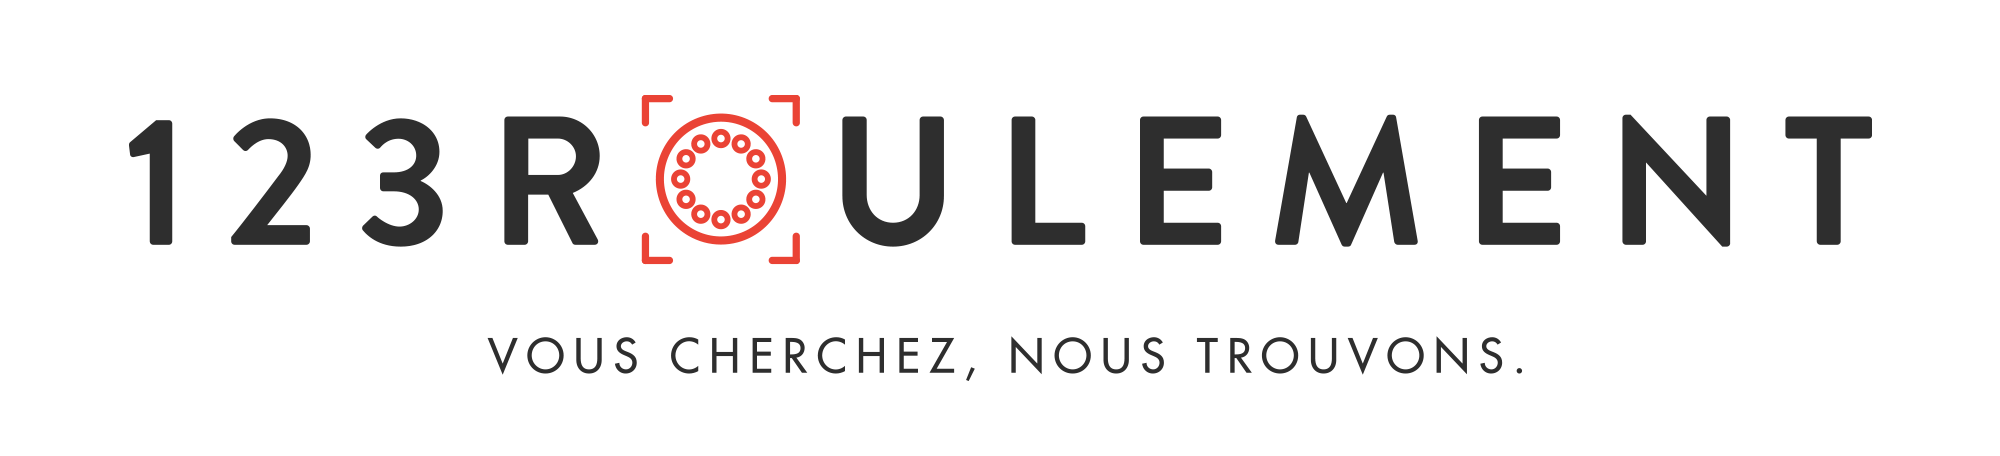 123-roulement-logo-1